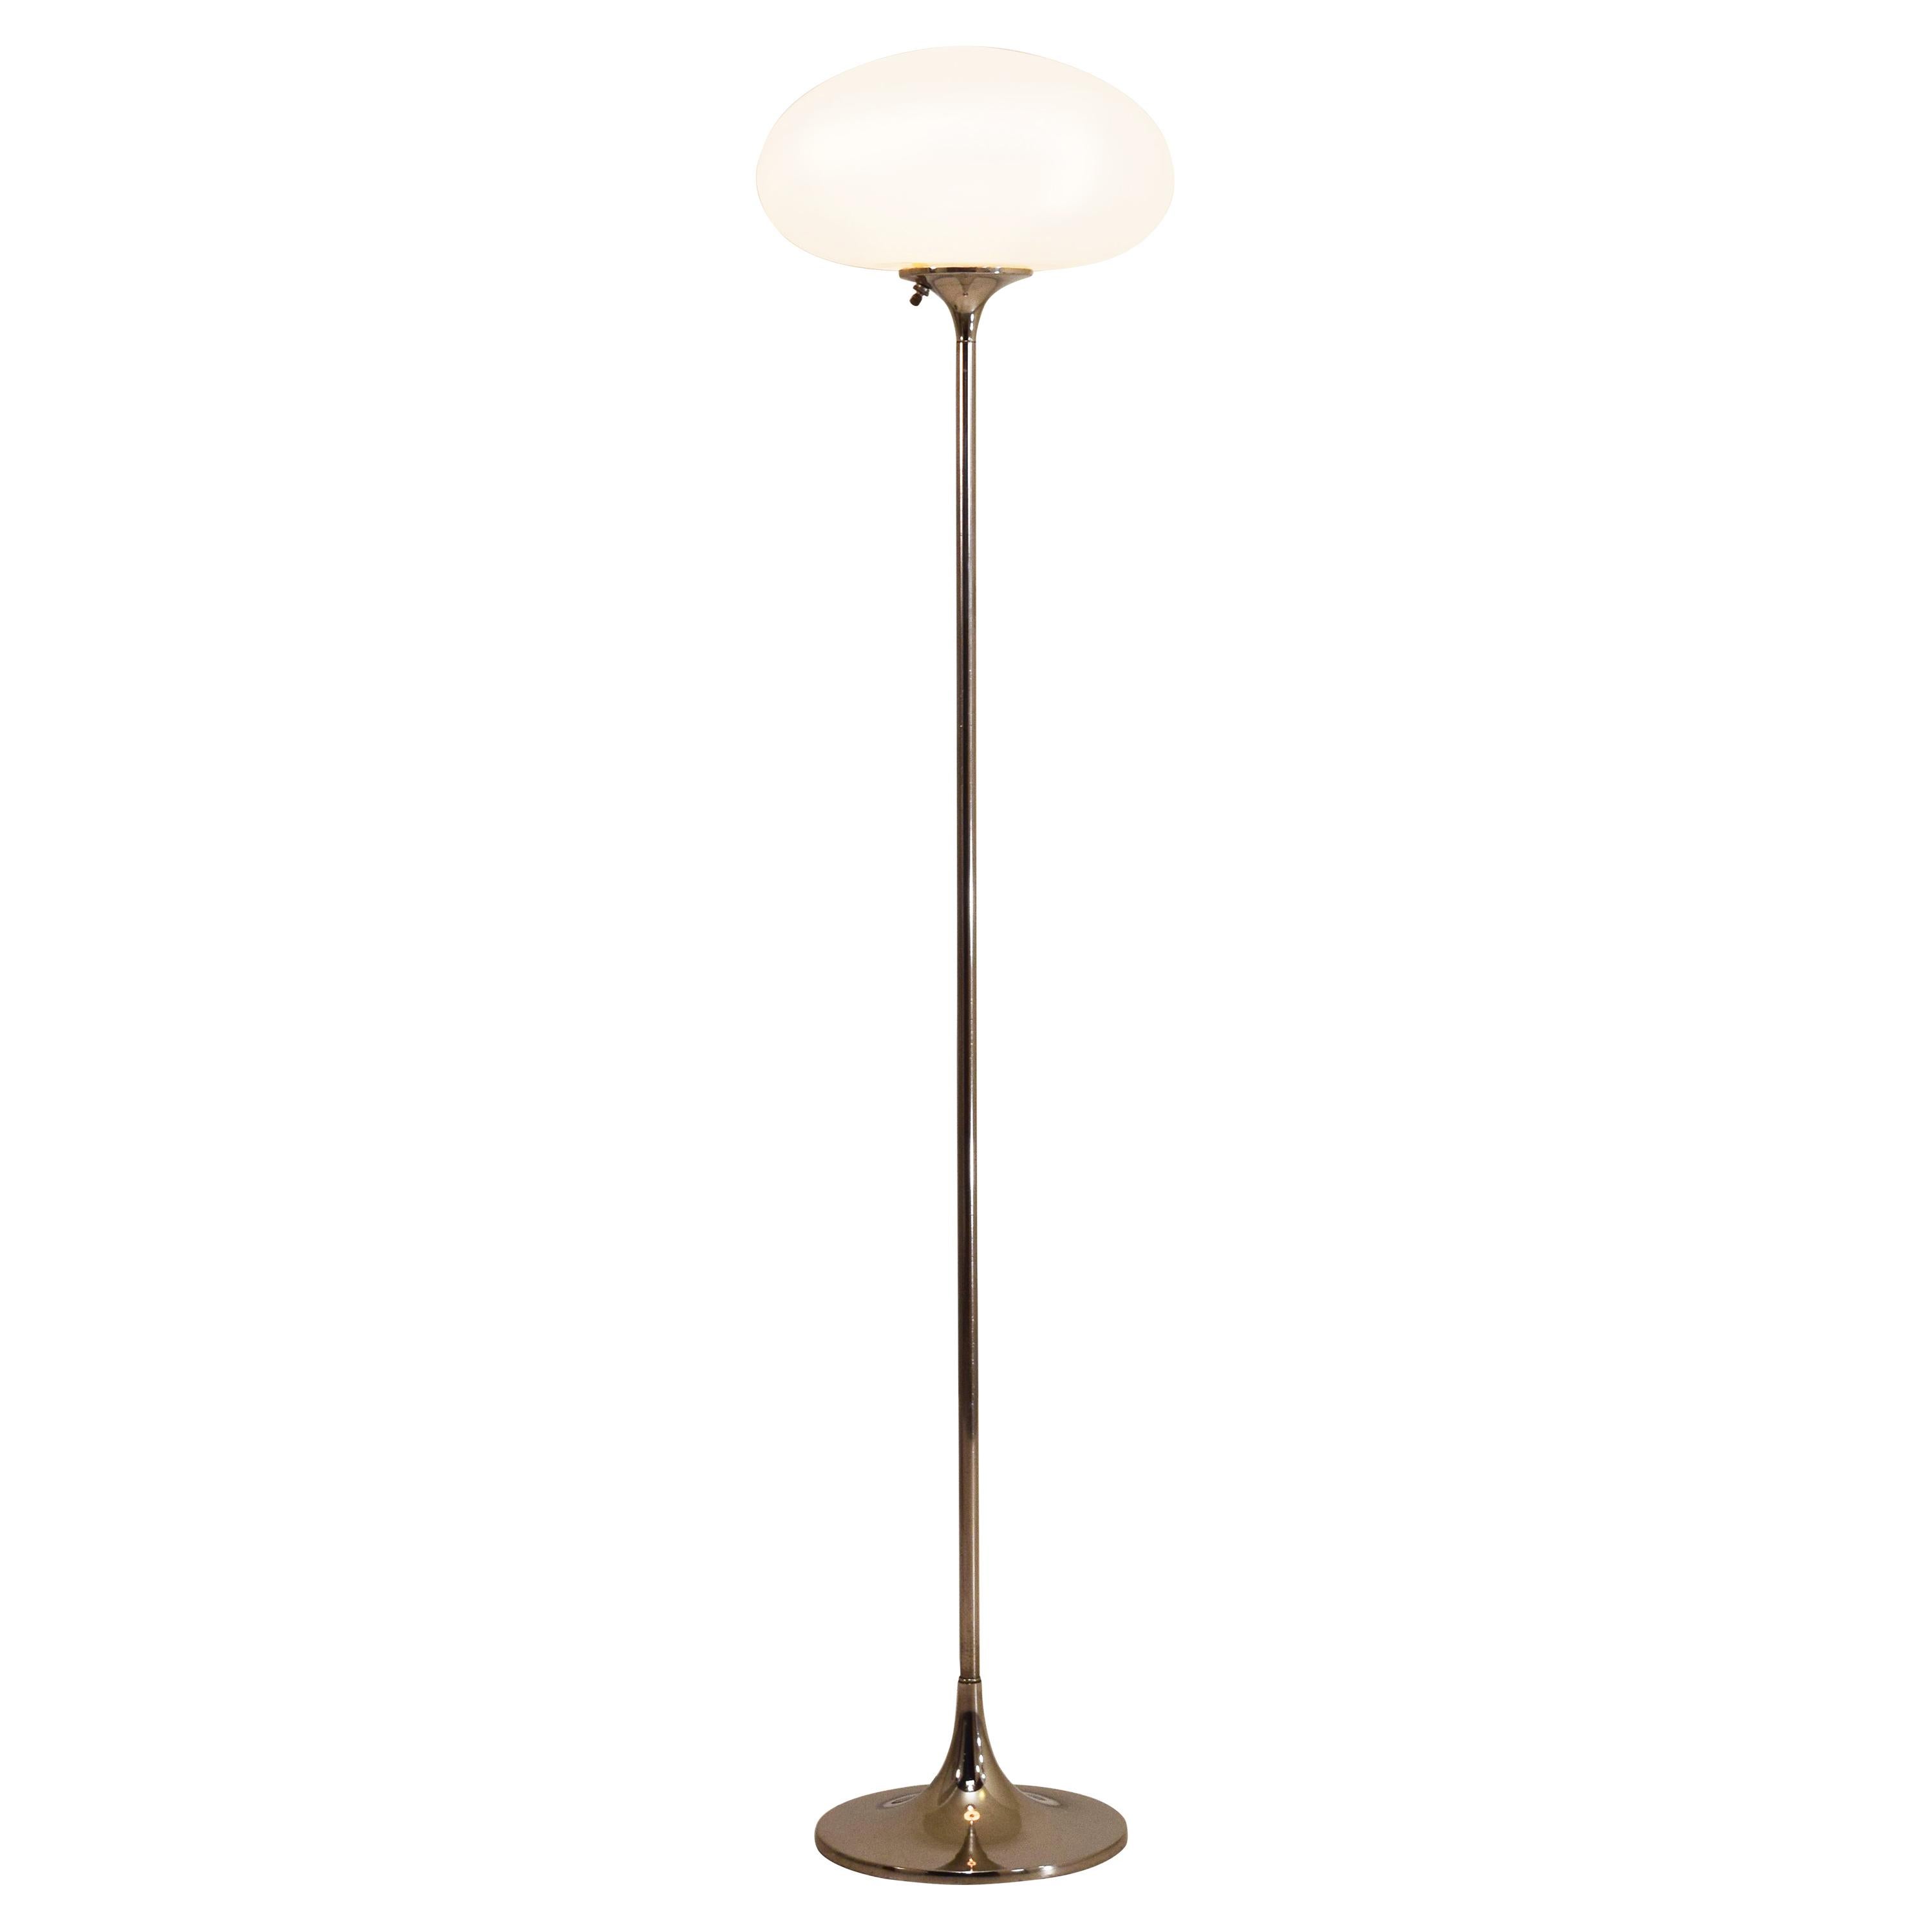 Chrome Floor Lamp with mushroom shade by Laurel